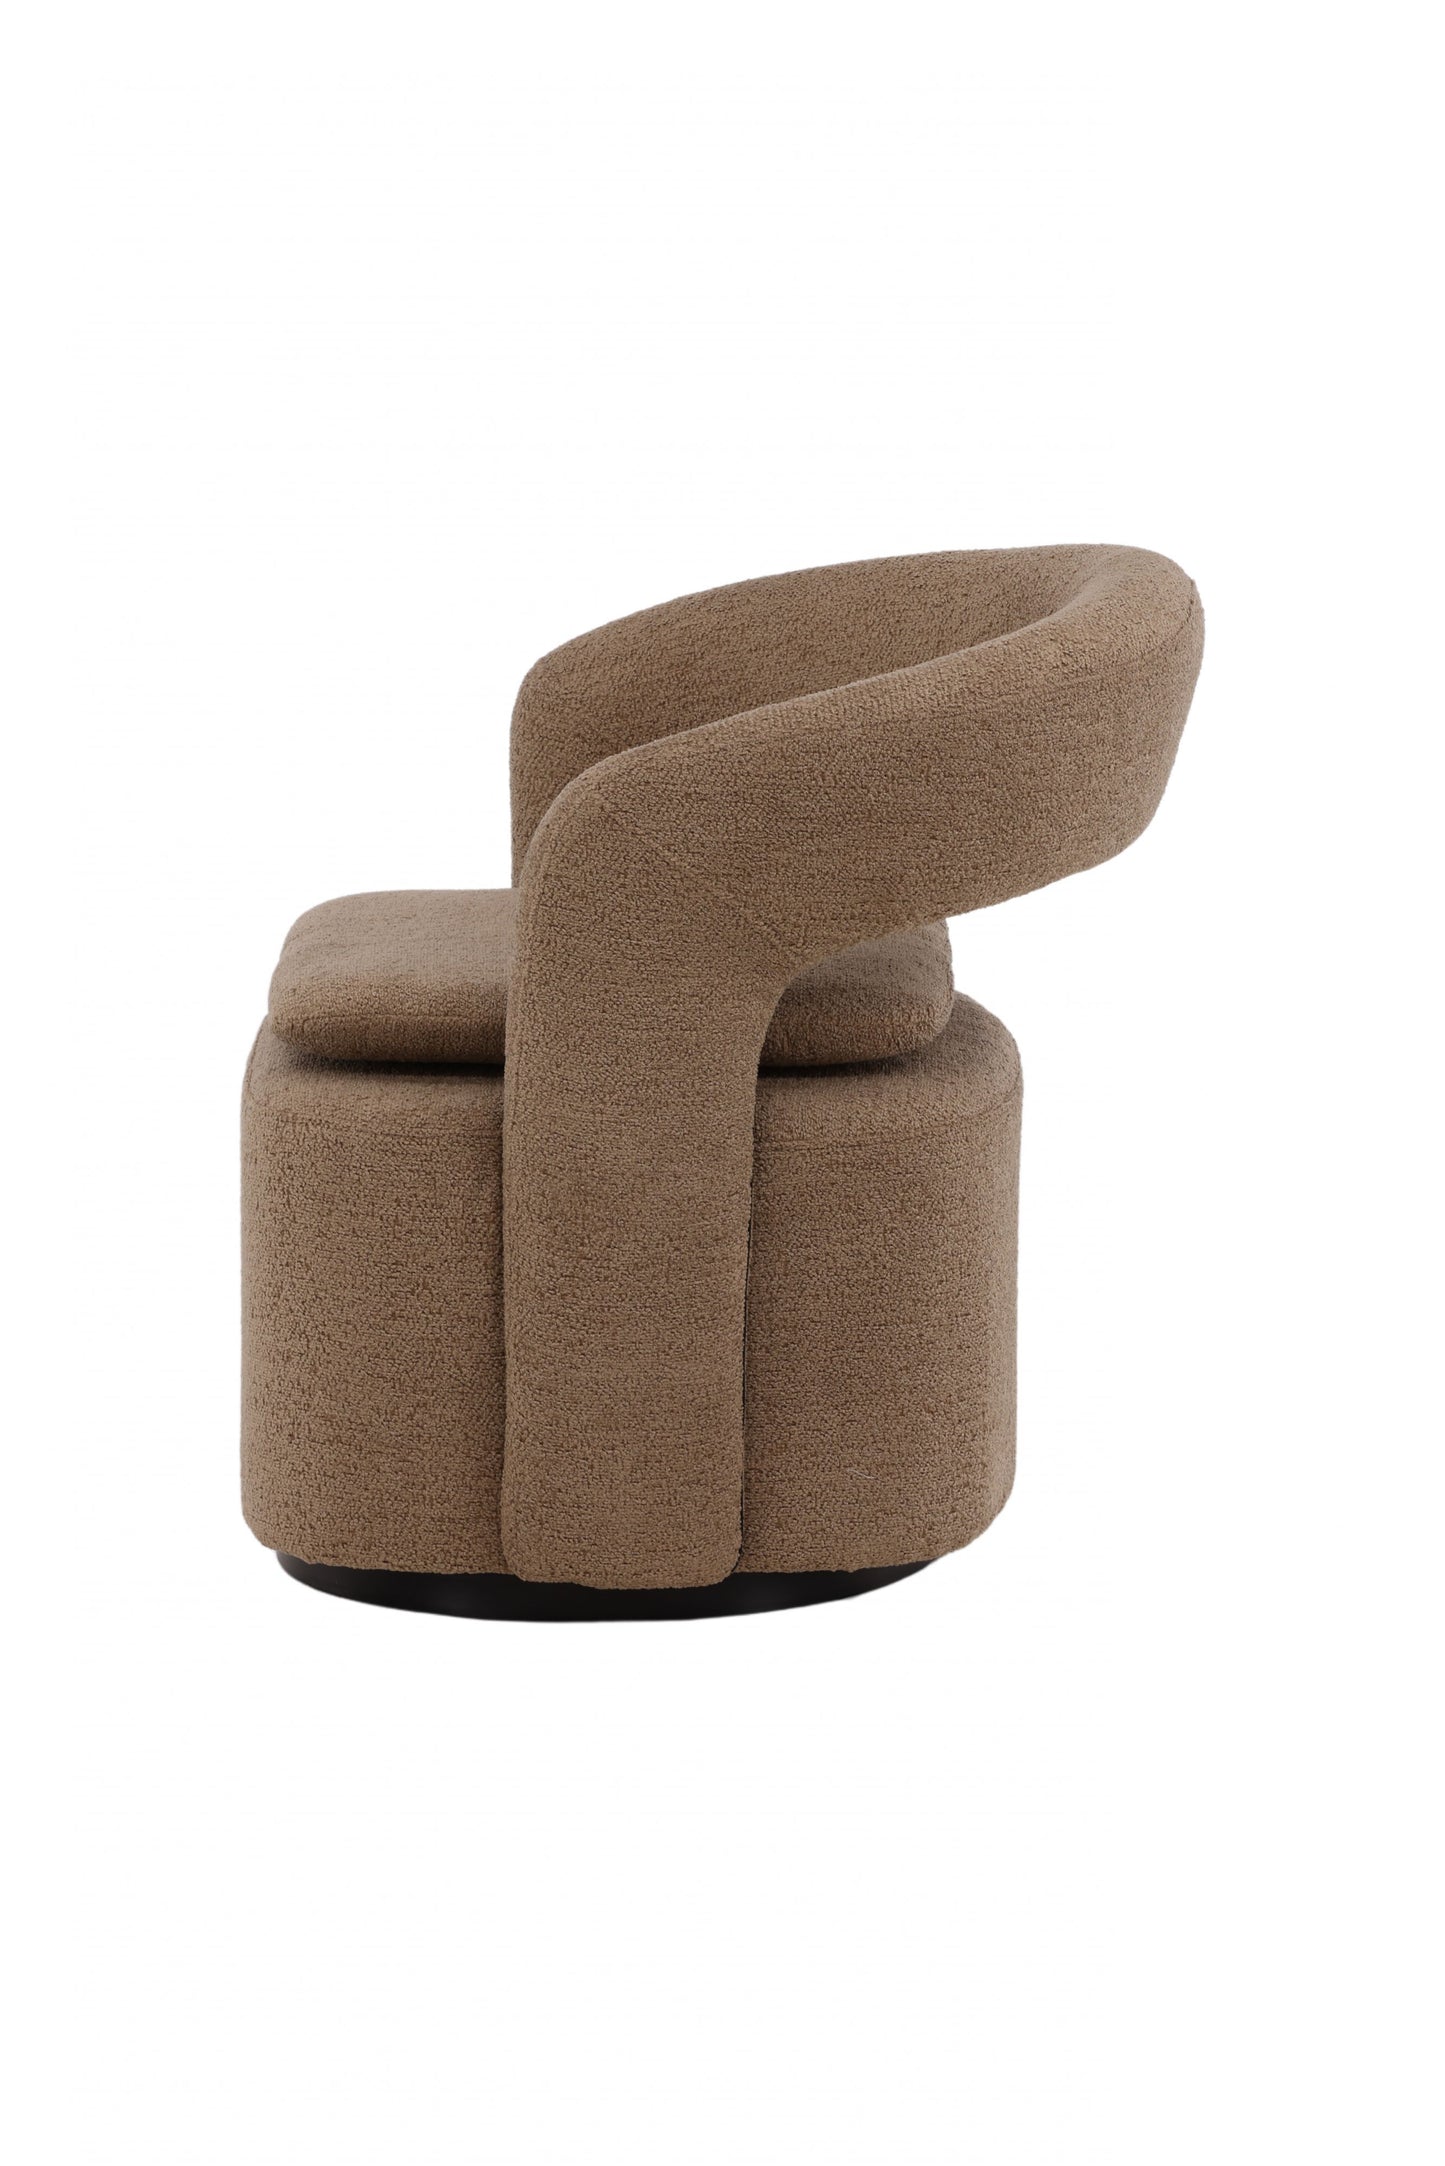 Venture Design | Laurel Lounge Chair - Svart / Beige Boucle